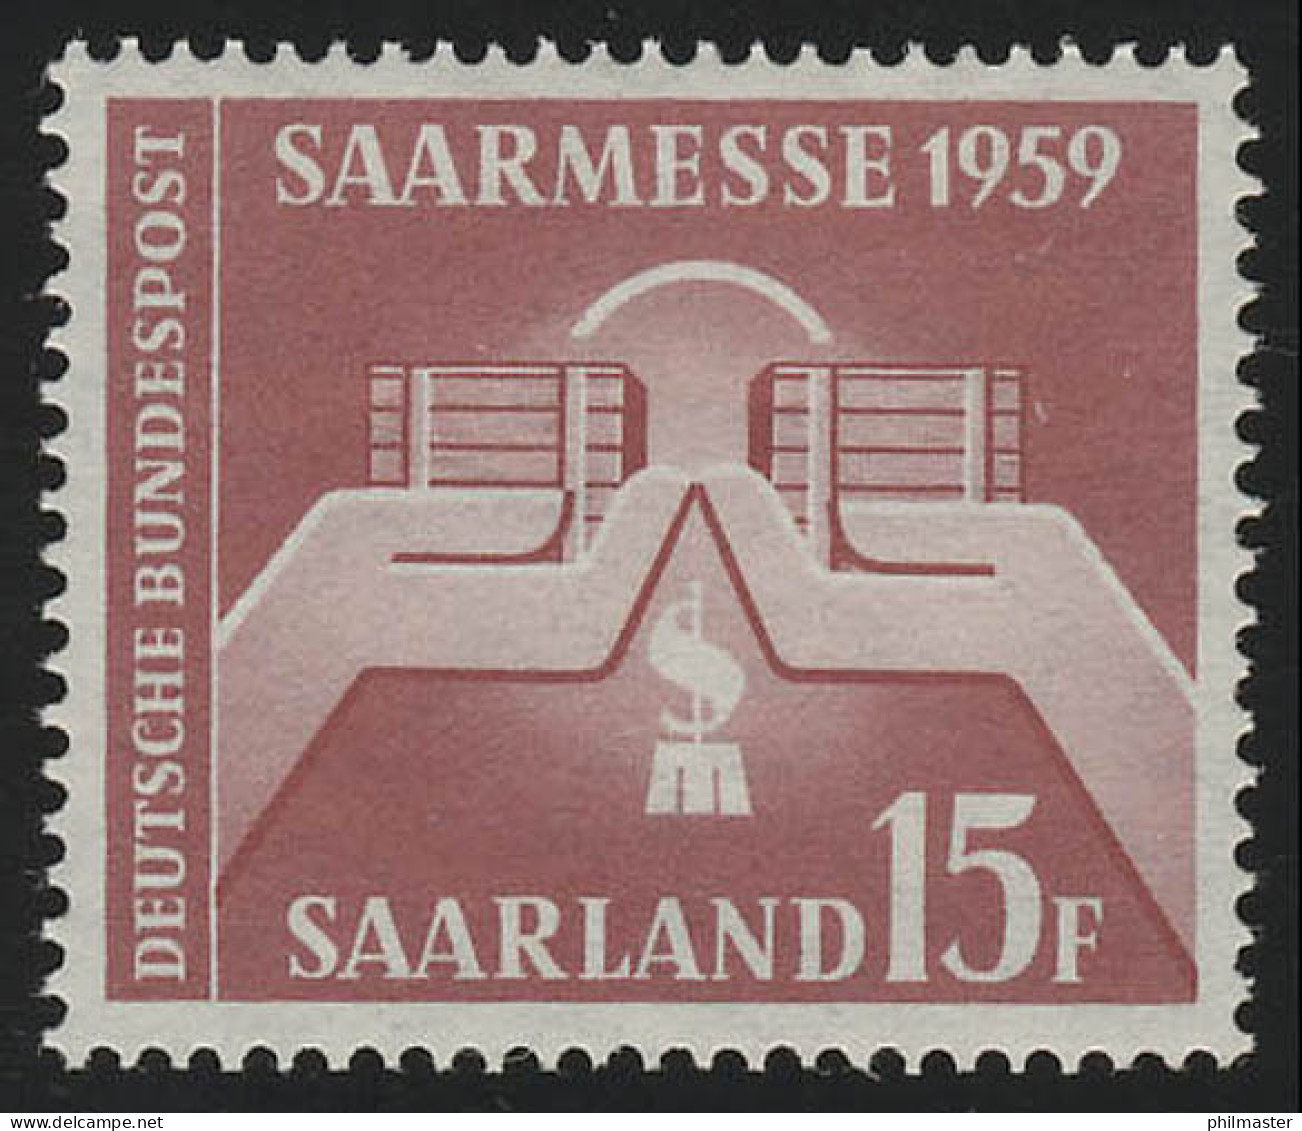 Saarland 447 Saarmesse Saarbrücken 1959, ** - Ongebruikt